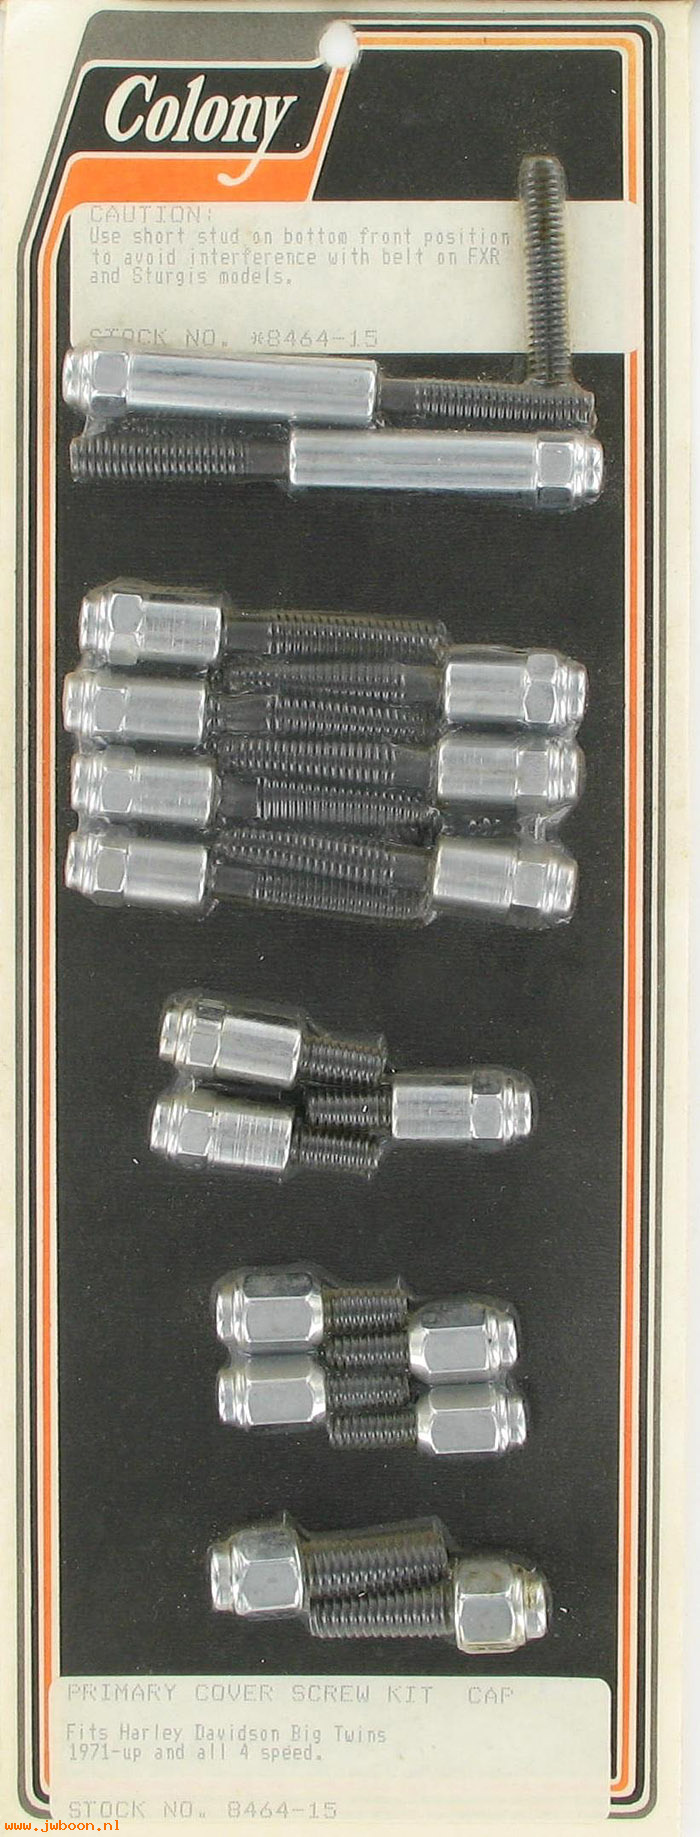 C 8464-15 (): Primary cover screw kit - FL '71-up, 4-speed, Colony in stock